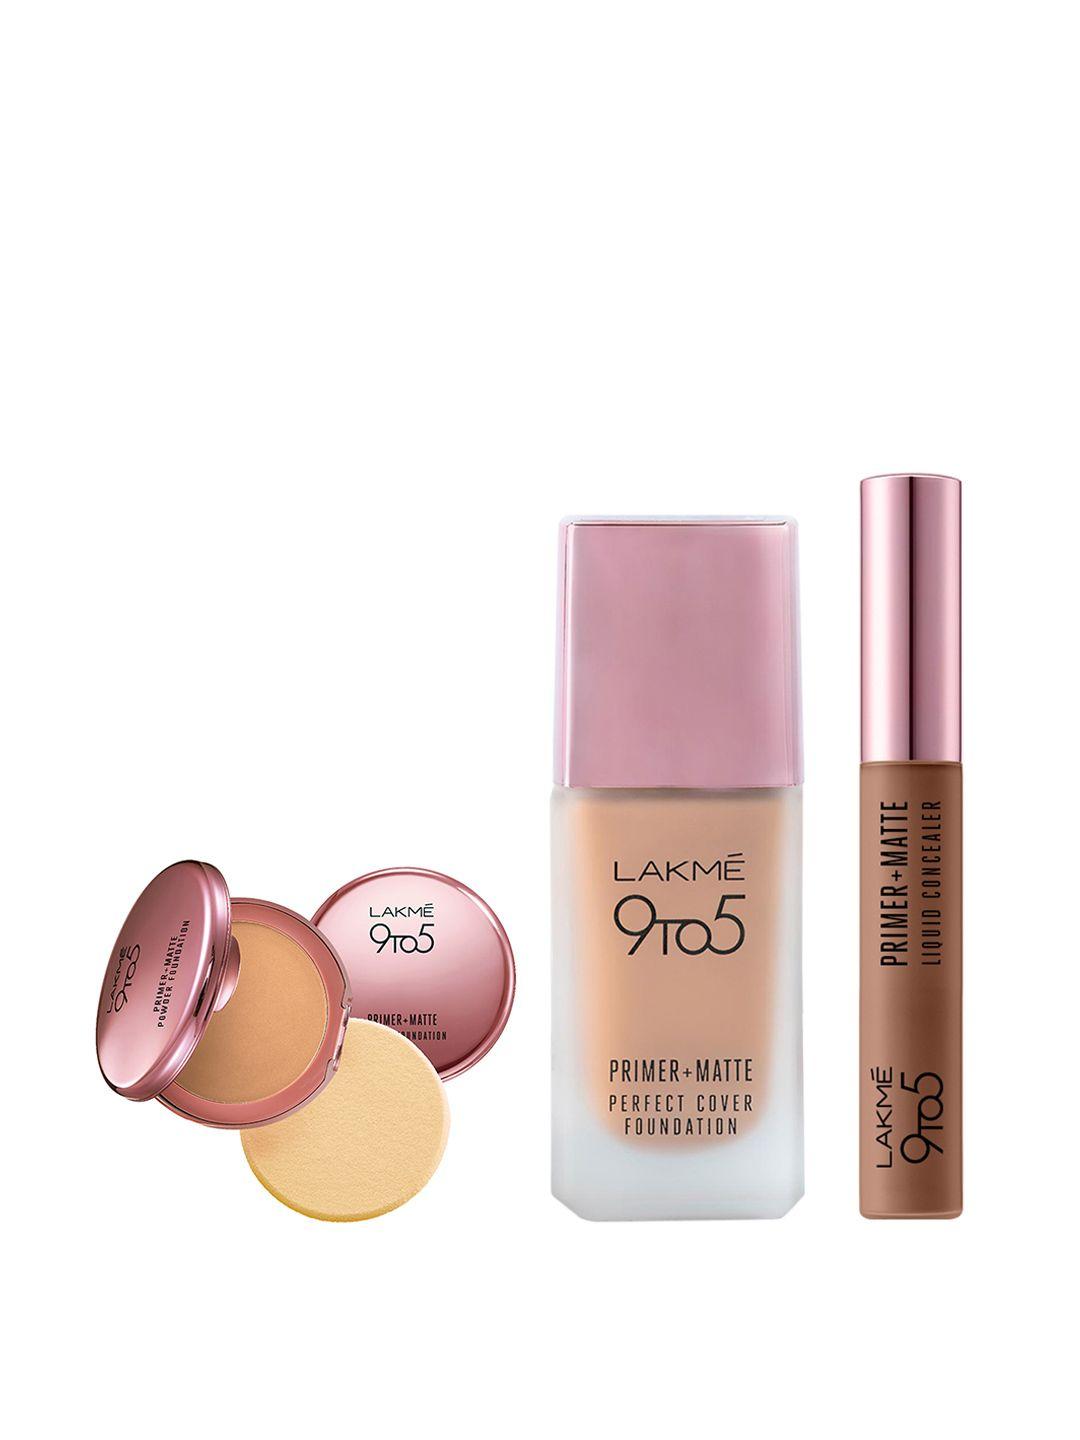 lakme 9to5 primer + matte makeup gift set - concealer + compact + foundation